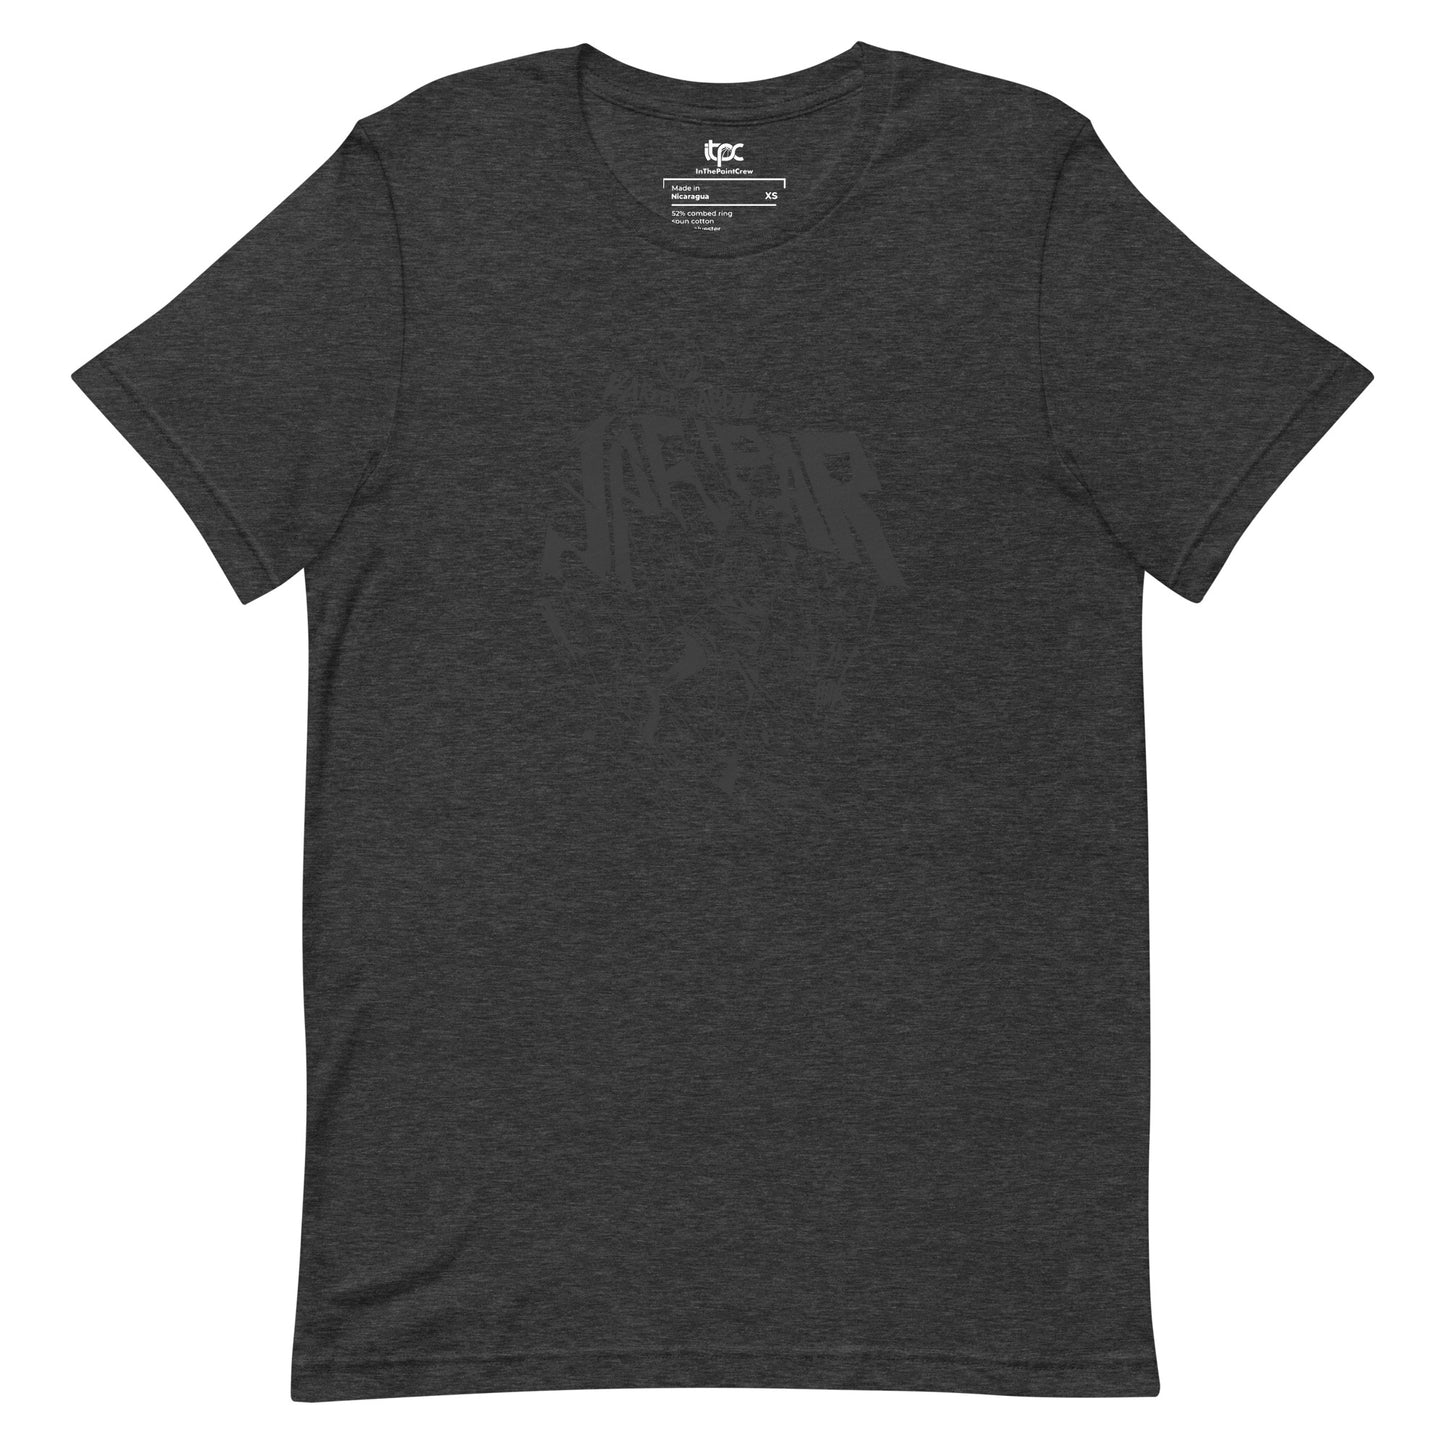 Kareem Abdul-Jabbar - "Sky Hook" t-shirt